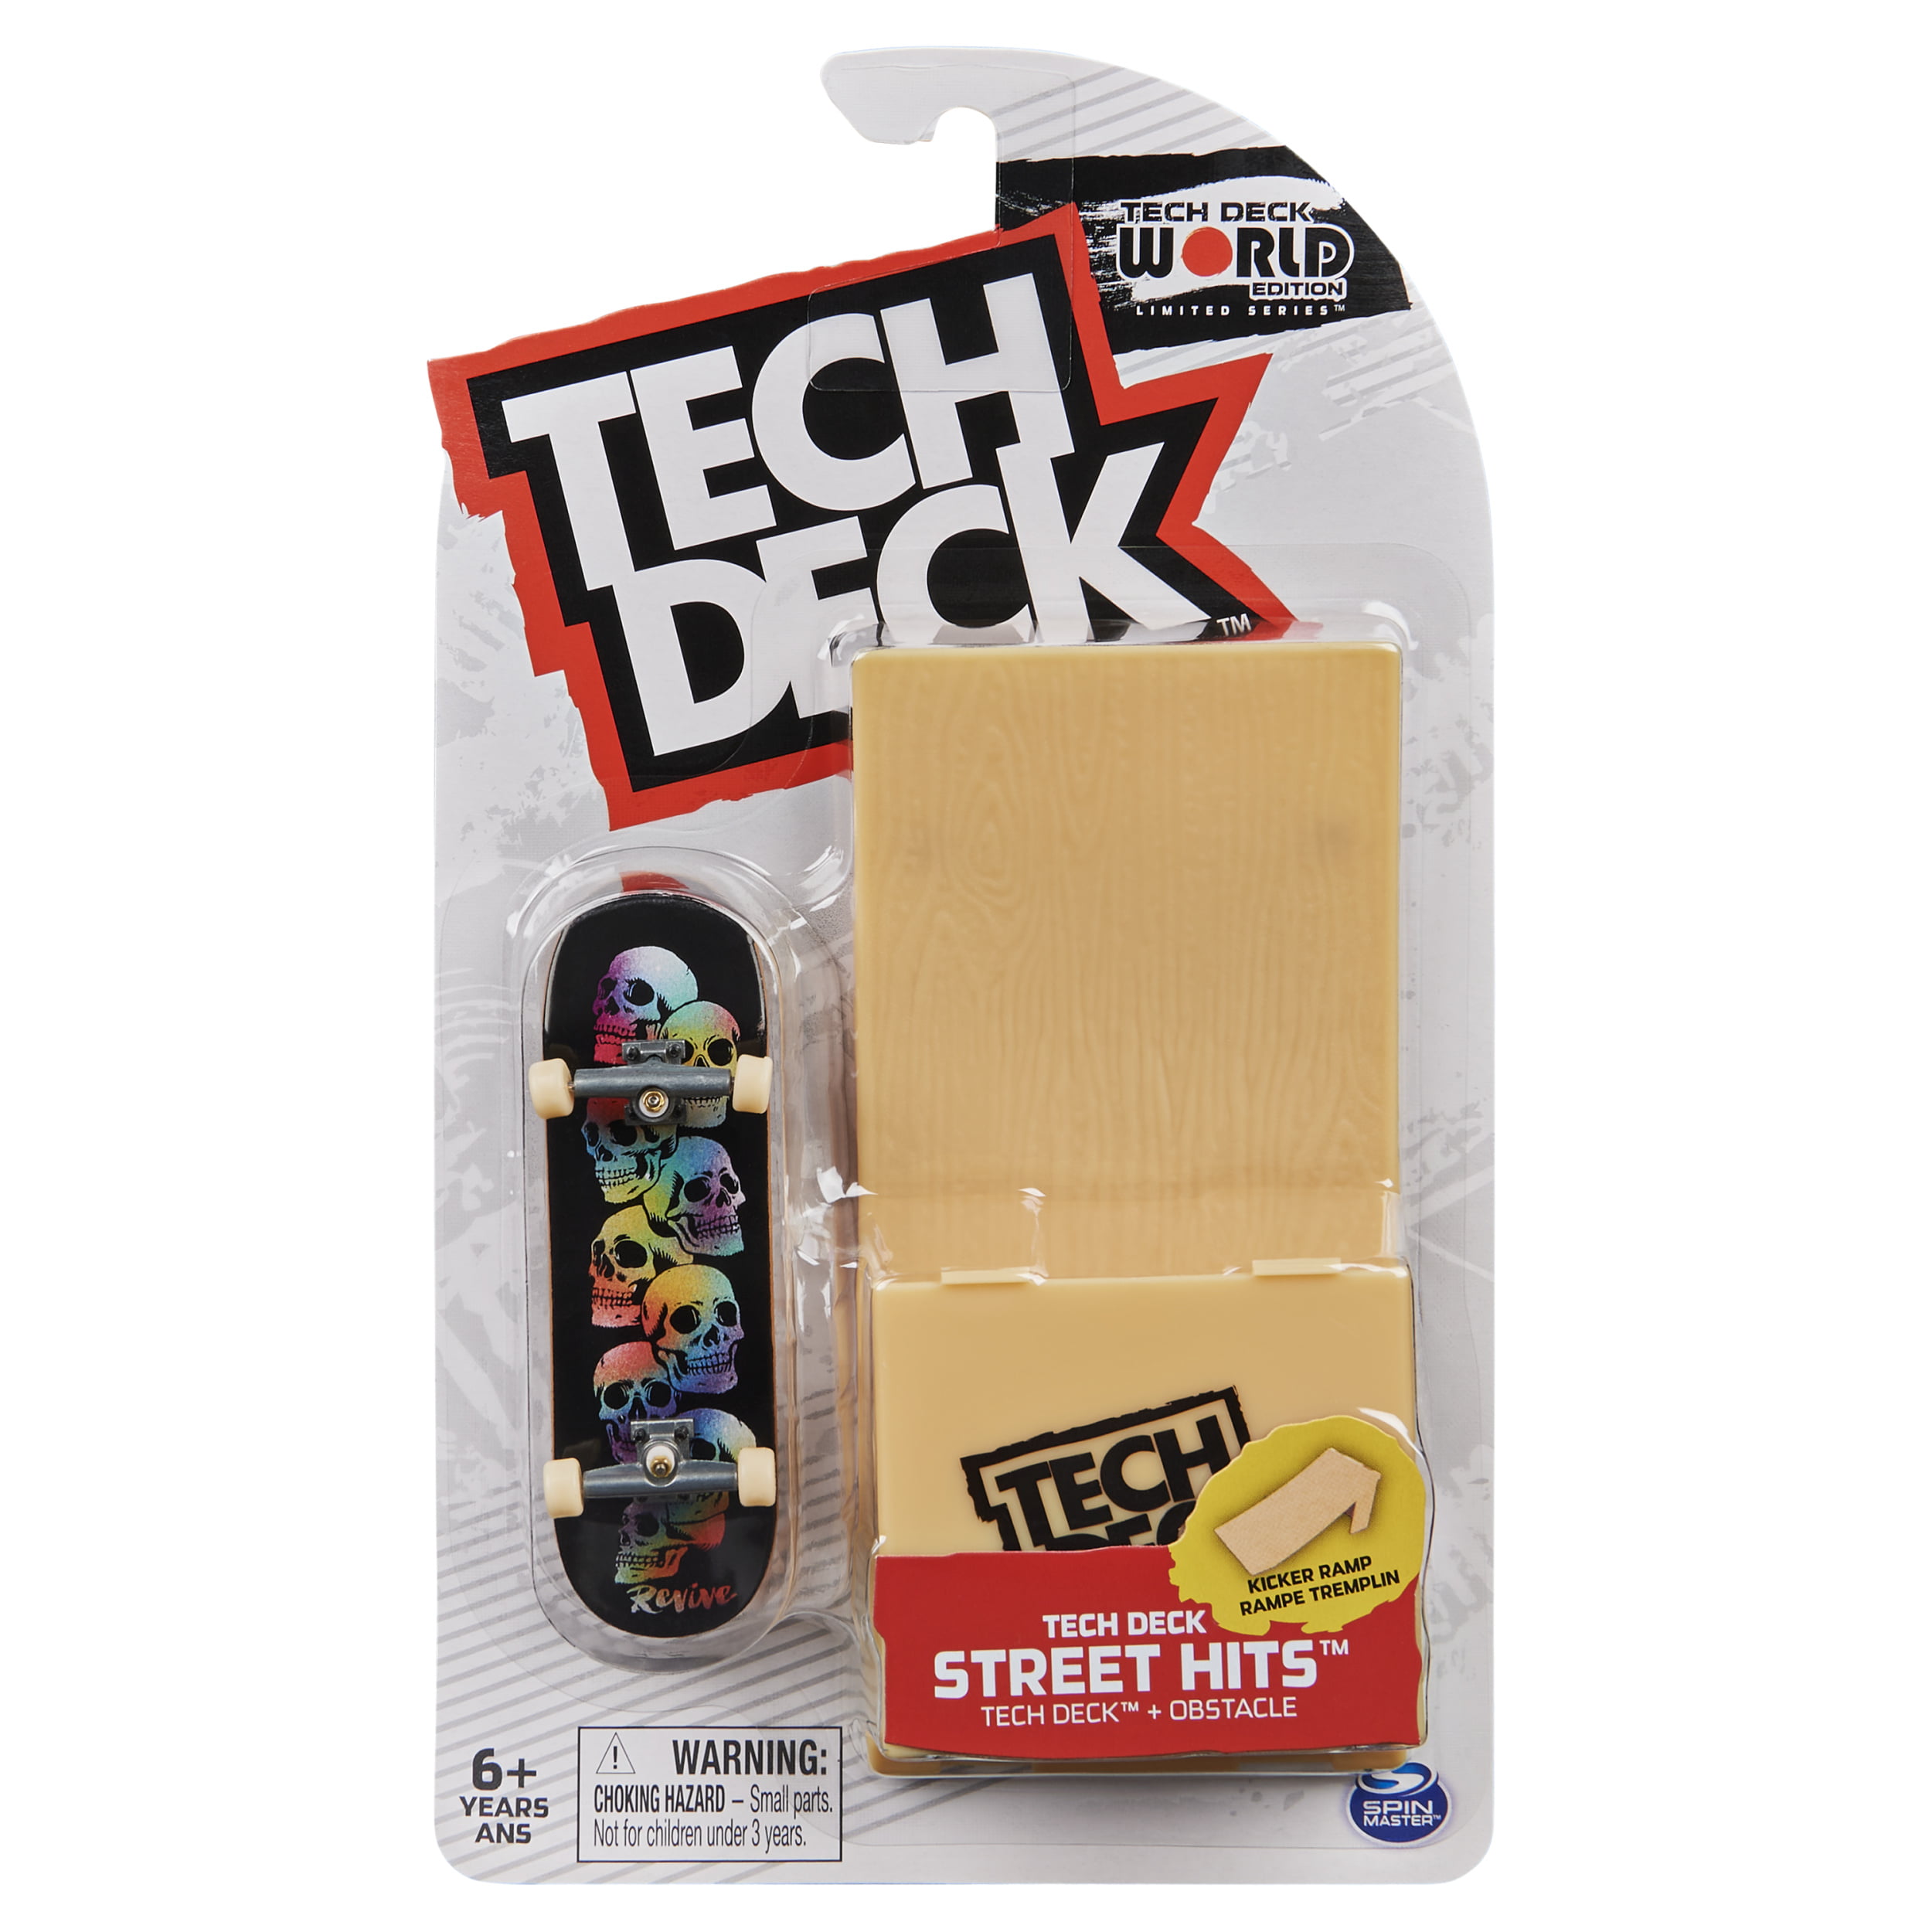 2019 Tech Deck Street Hits Baker Skate Fingerboard and Kicker Ramp for sale online 